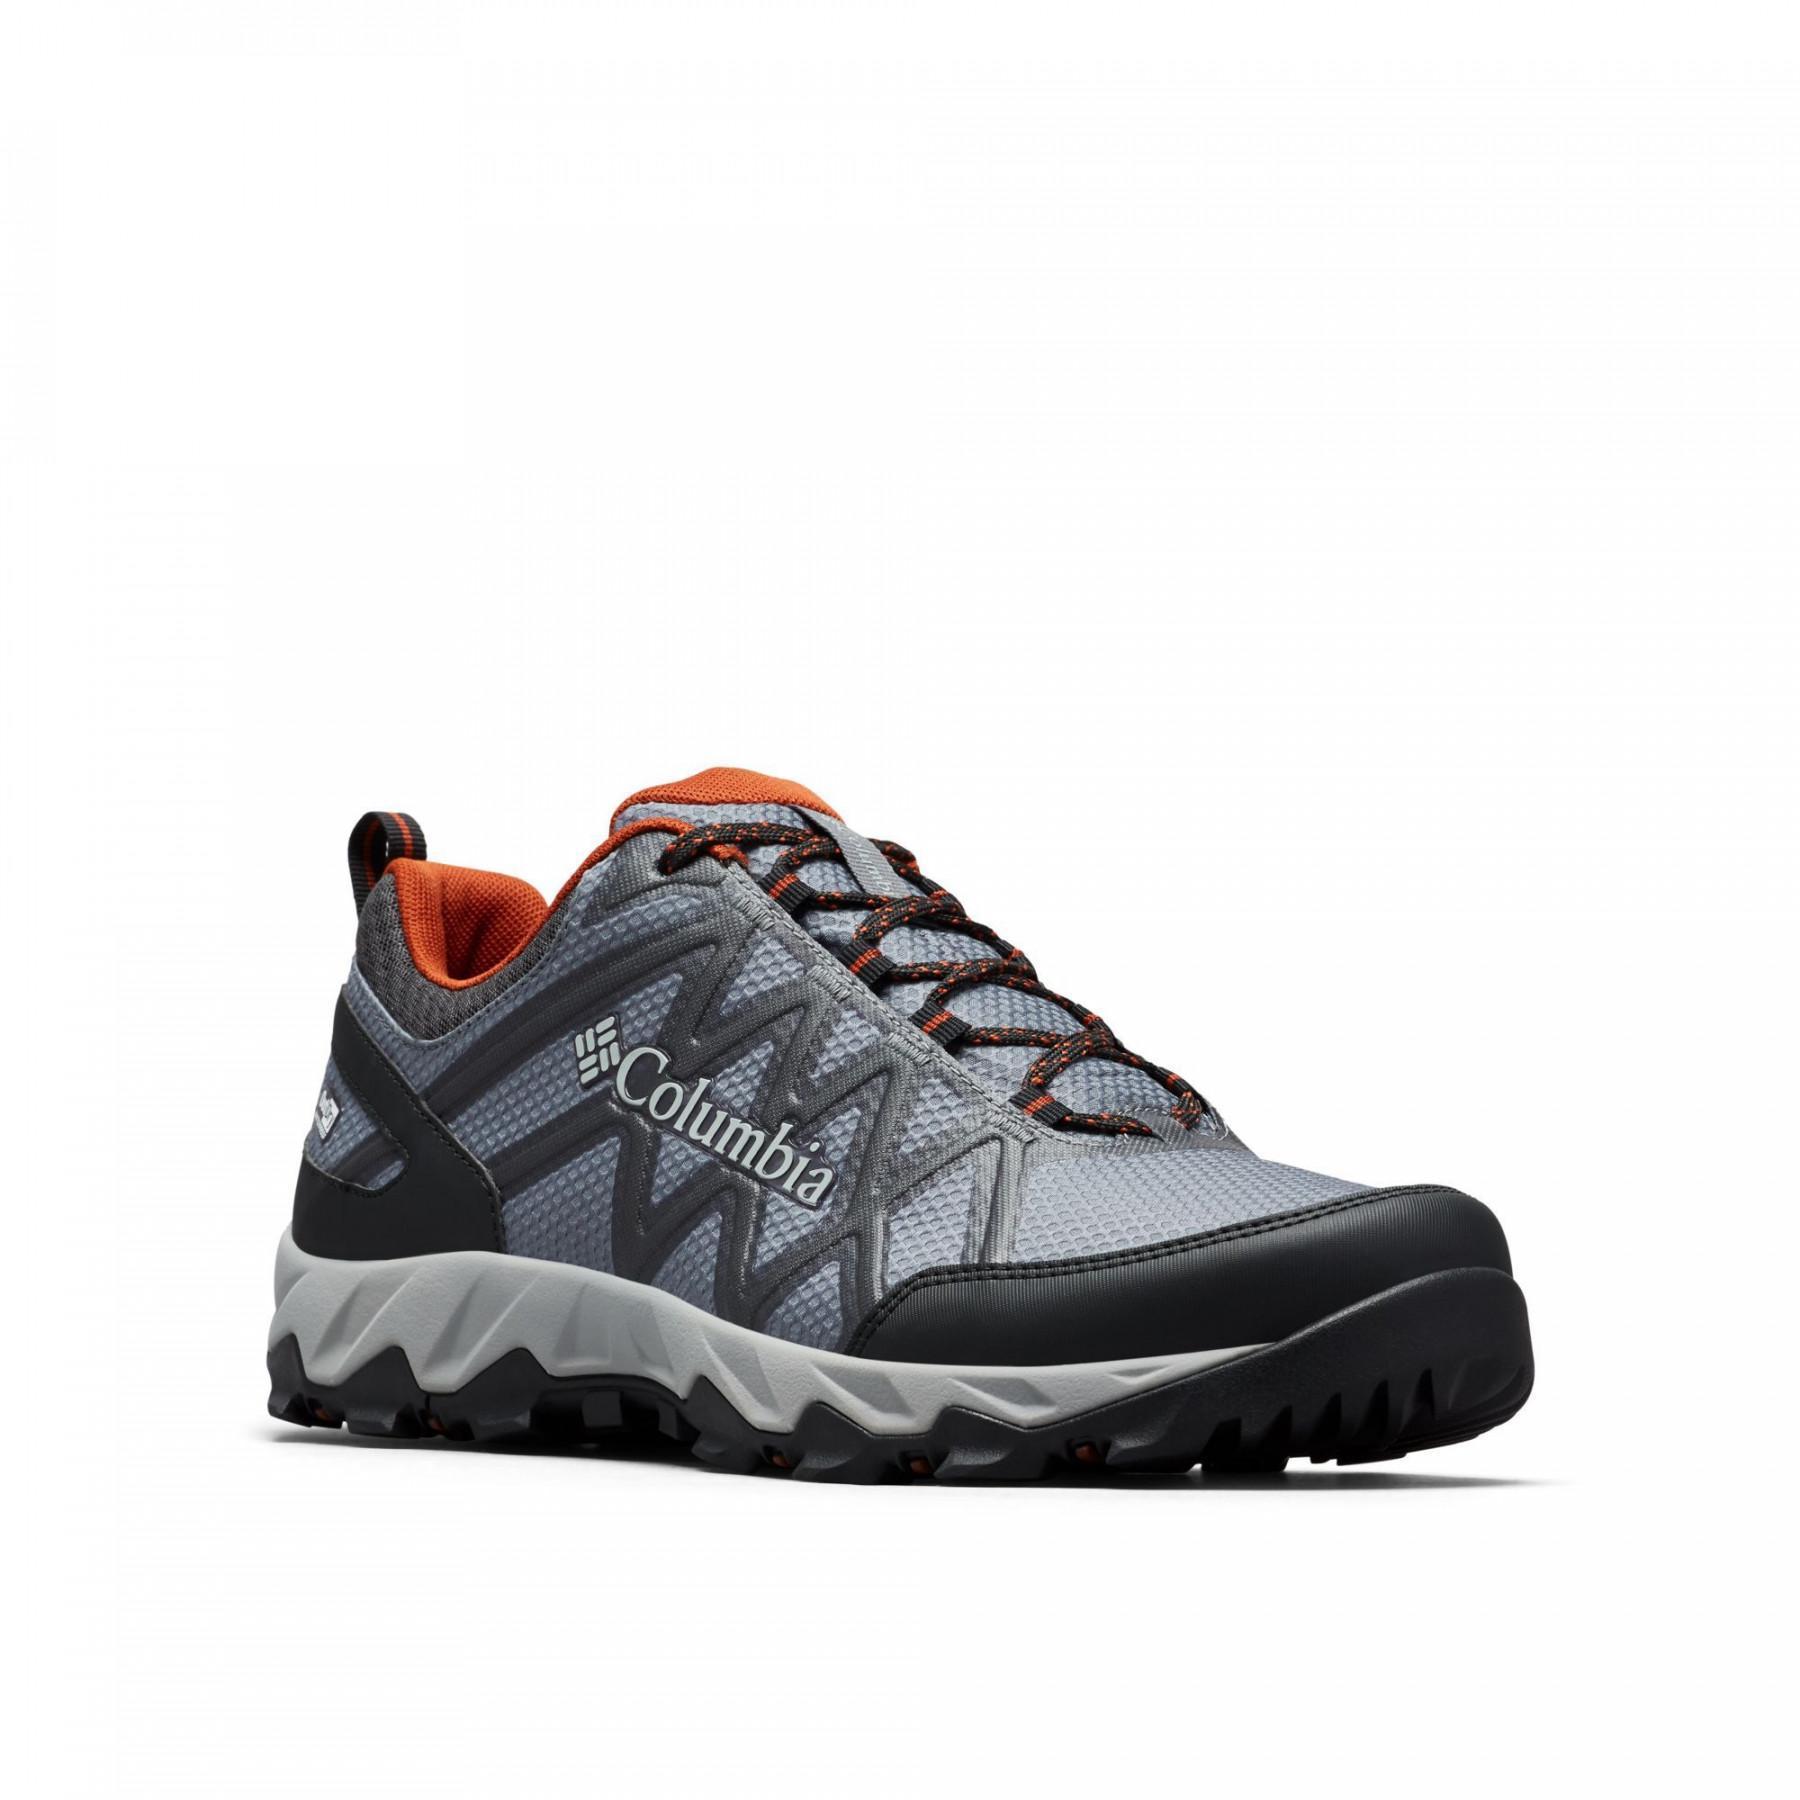 Chaussures de randonnée Columbia Peakfreak X2 Outdry